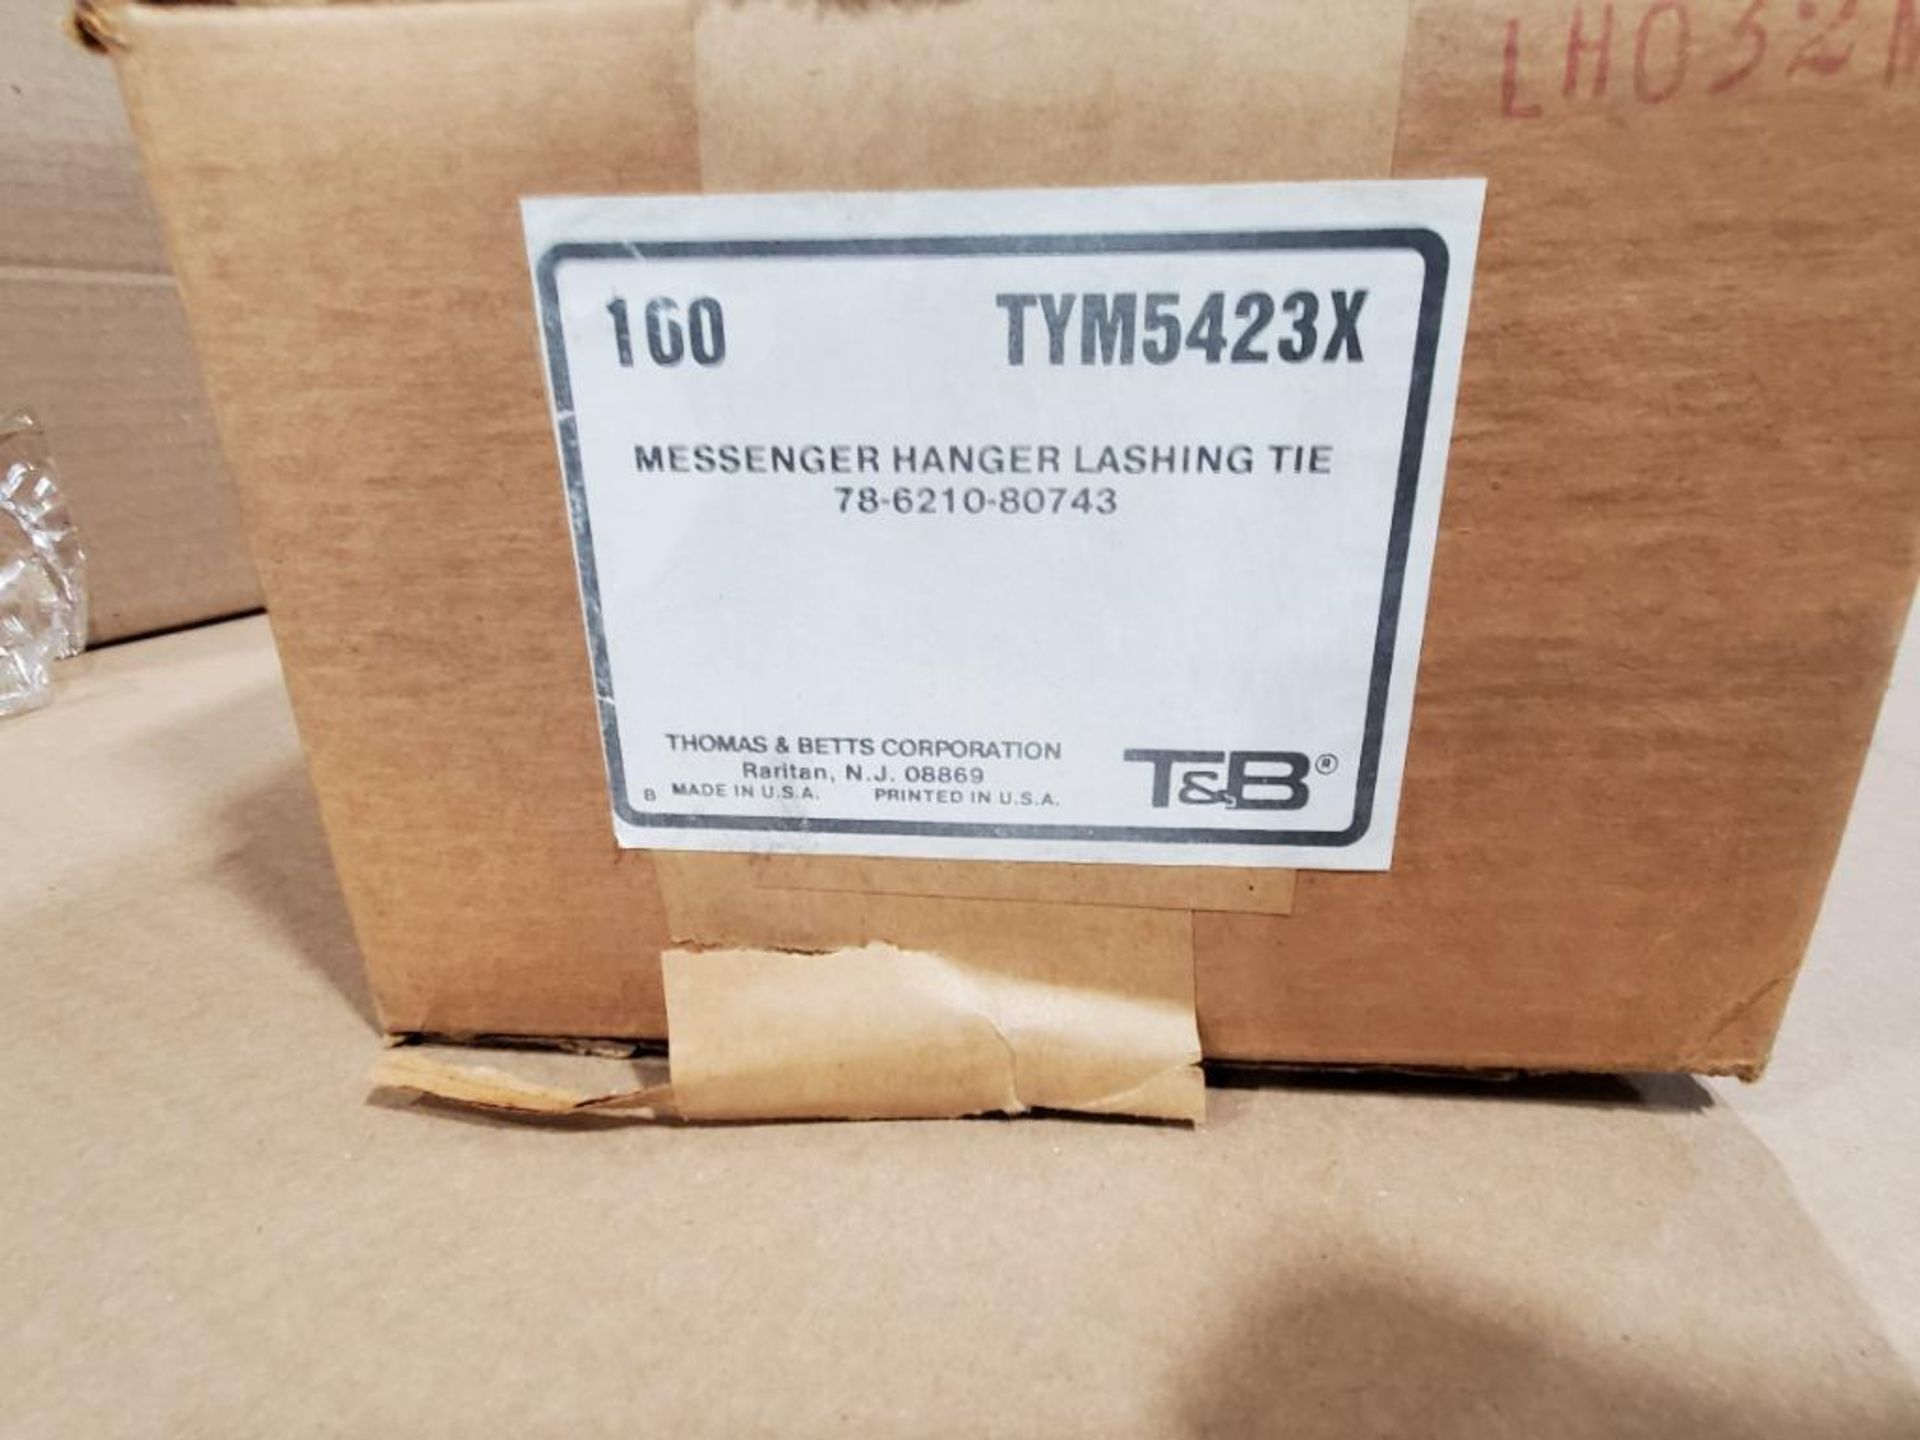 Qty 200 - Thomas & Betts Messenger Hanger Lashing Tie. Part number TYM5423X. 8 bundles of 25. - Image 2 of 4